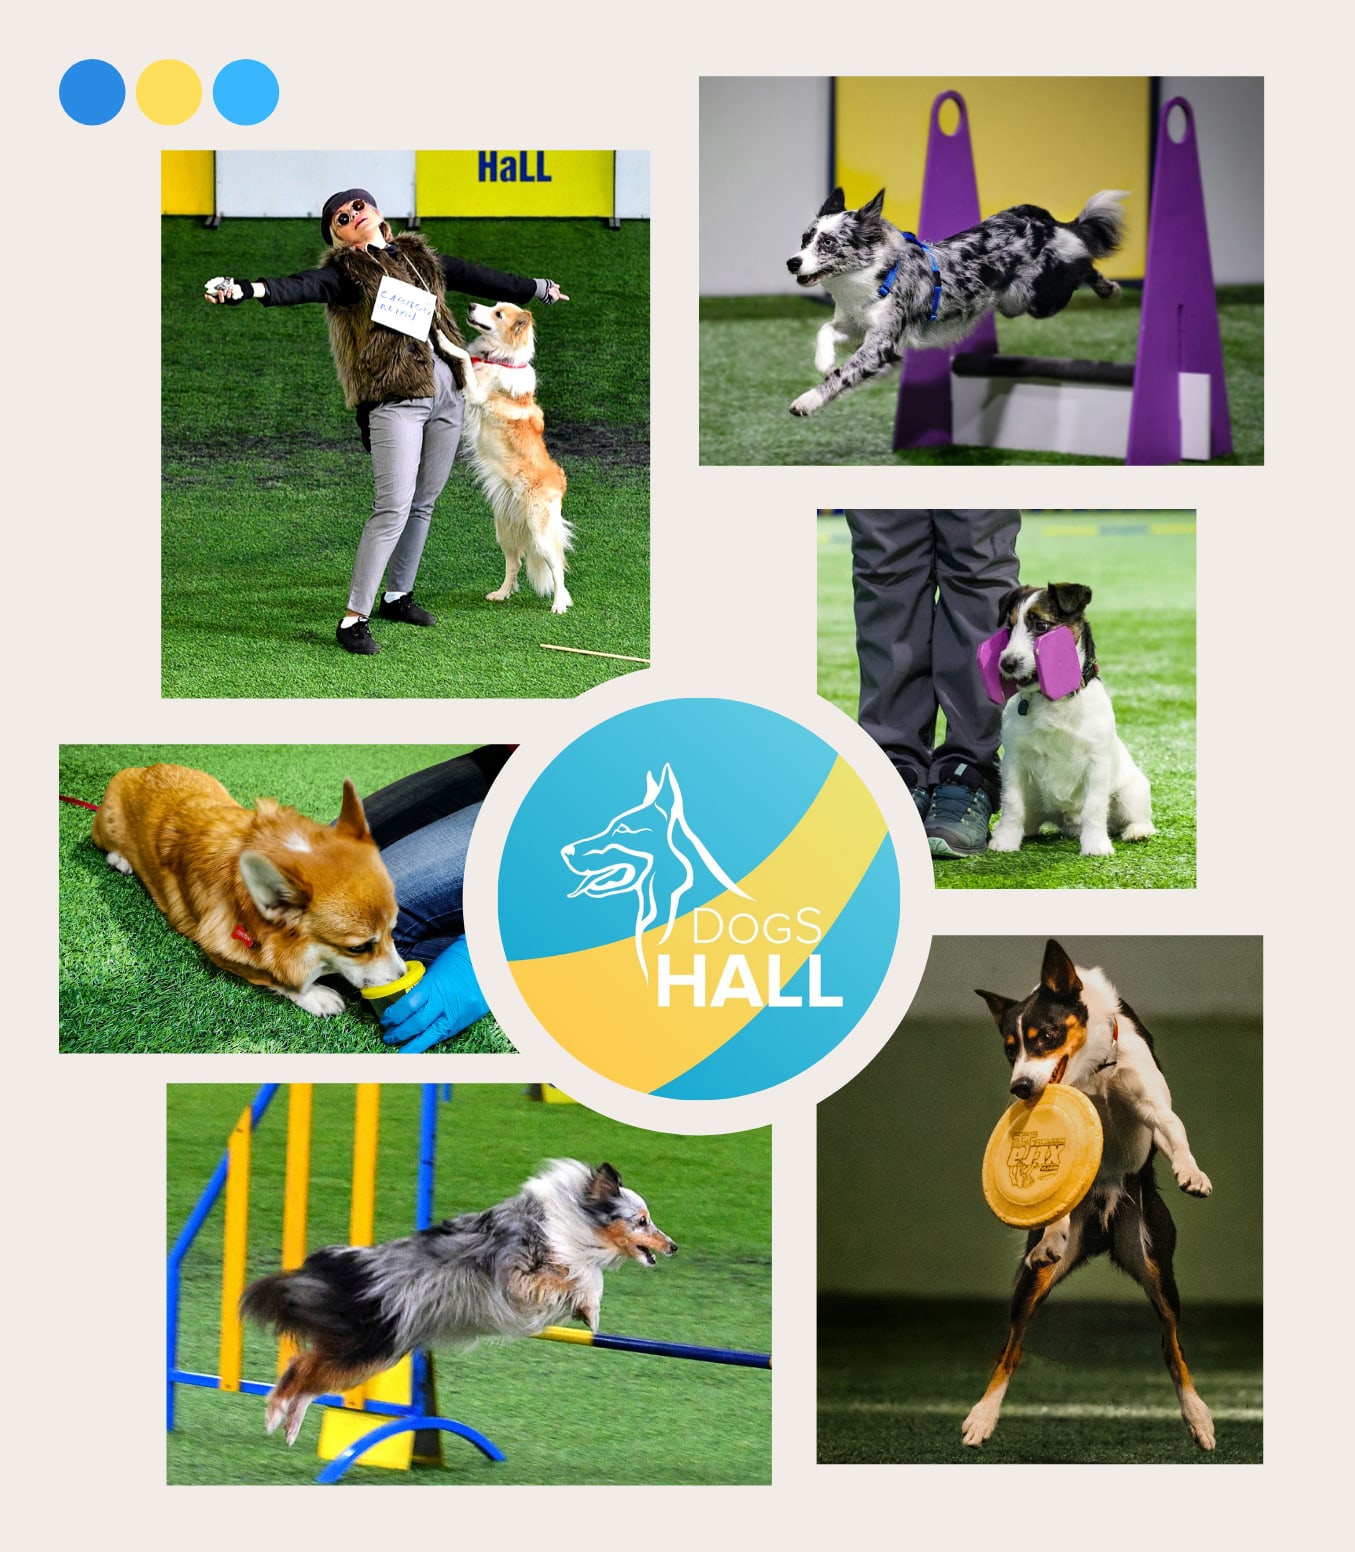 Dogs hall